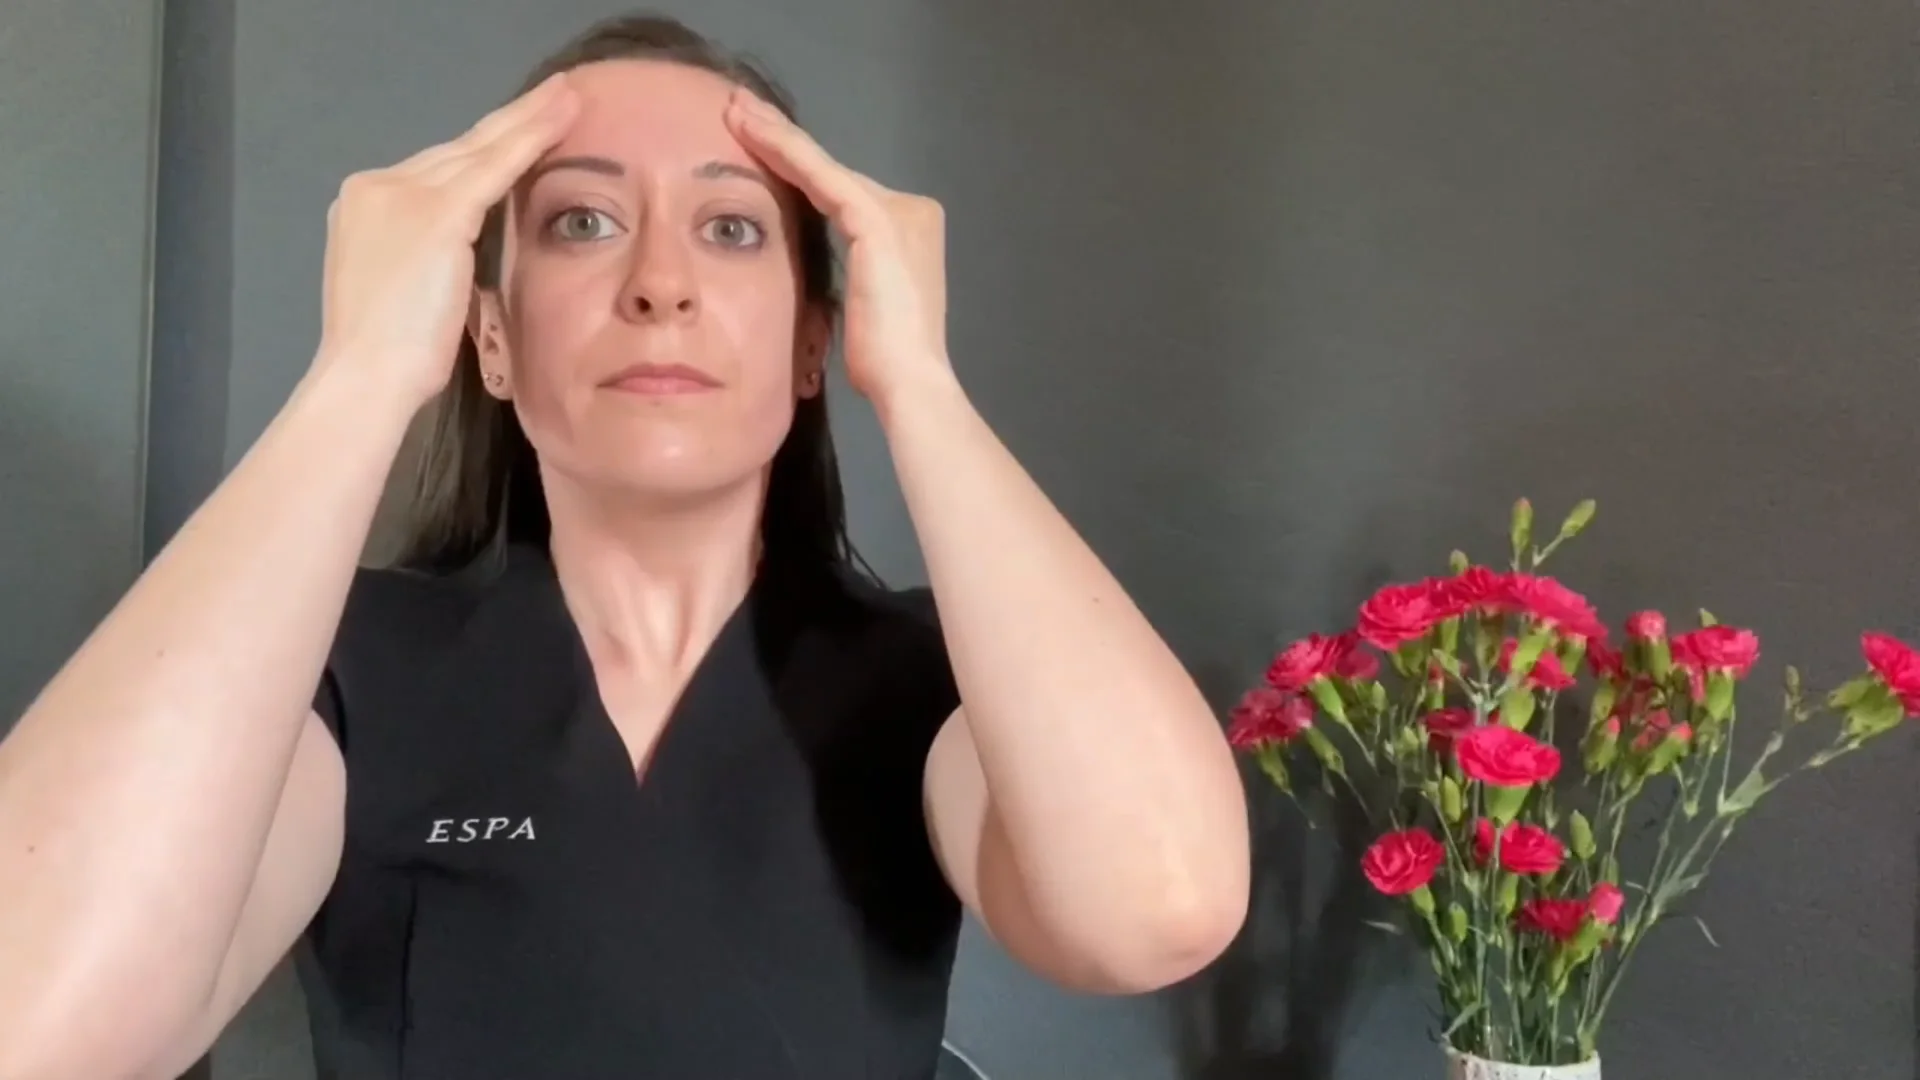 Babor Beauty Spa by Igea Cosmetic on Vimeo